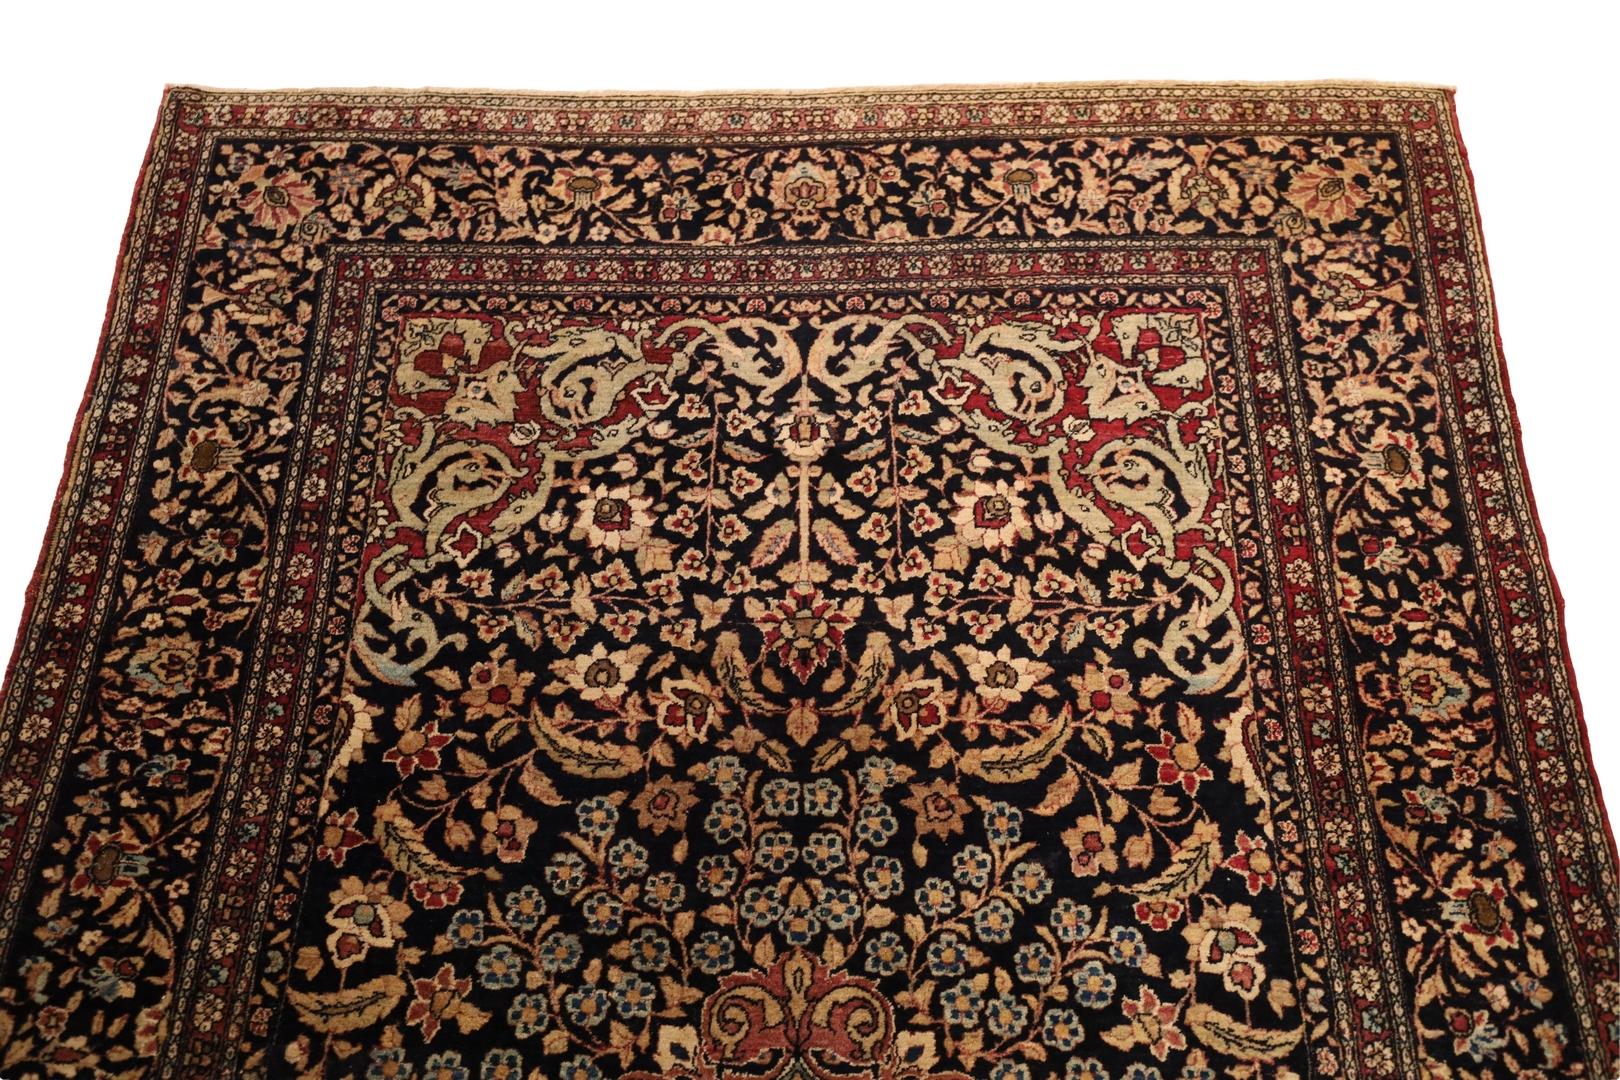 Hand-Knotted Esfahan Antique Rug, Beige Blue Red Black - 4 x 6 For Sale